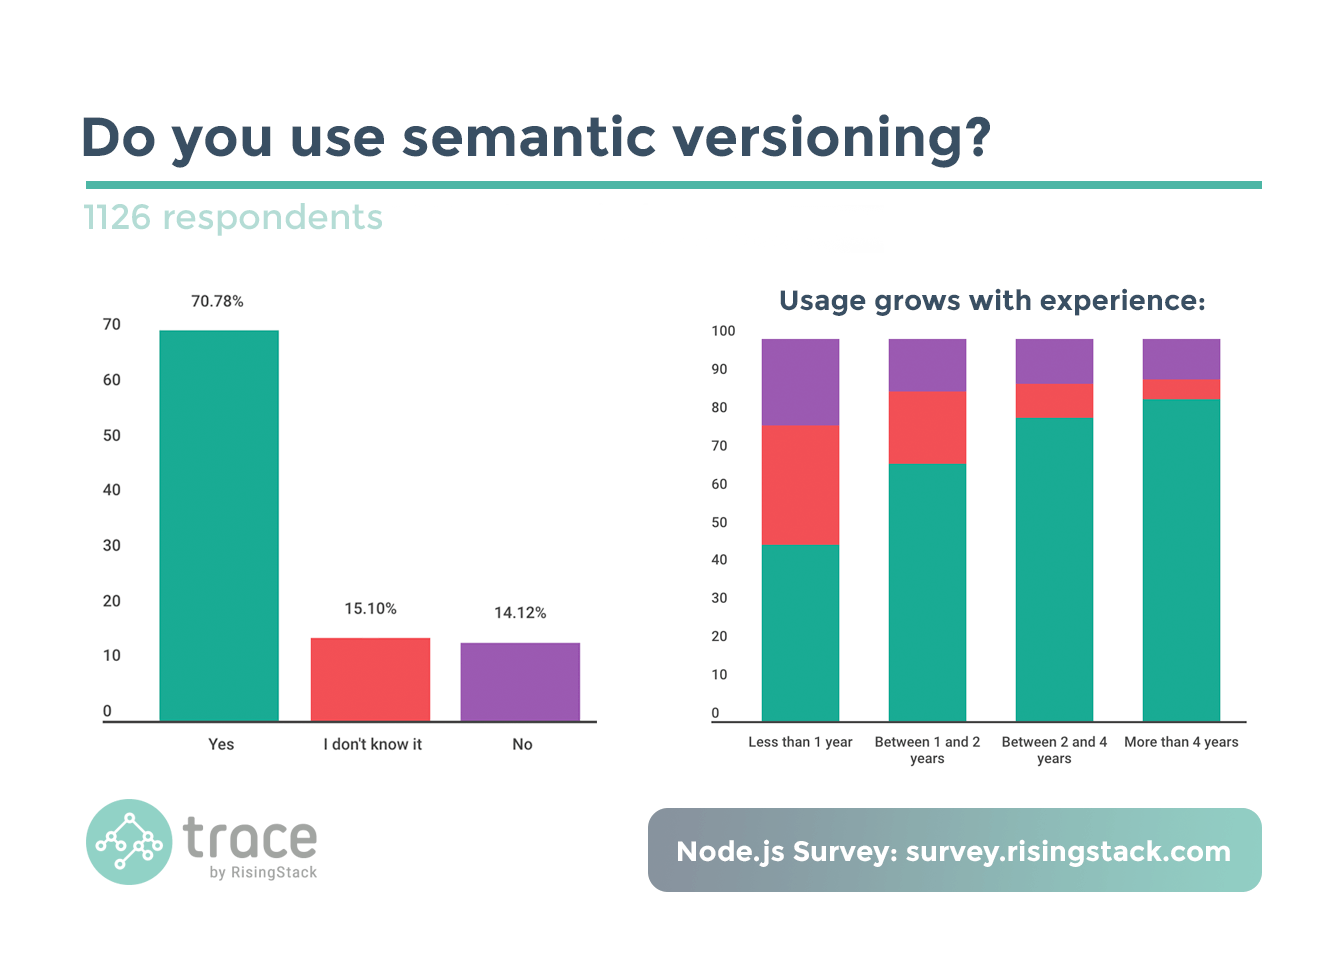 Node.js Best Practices for 2017 - Semantic versioning survey results